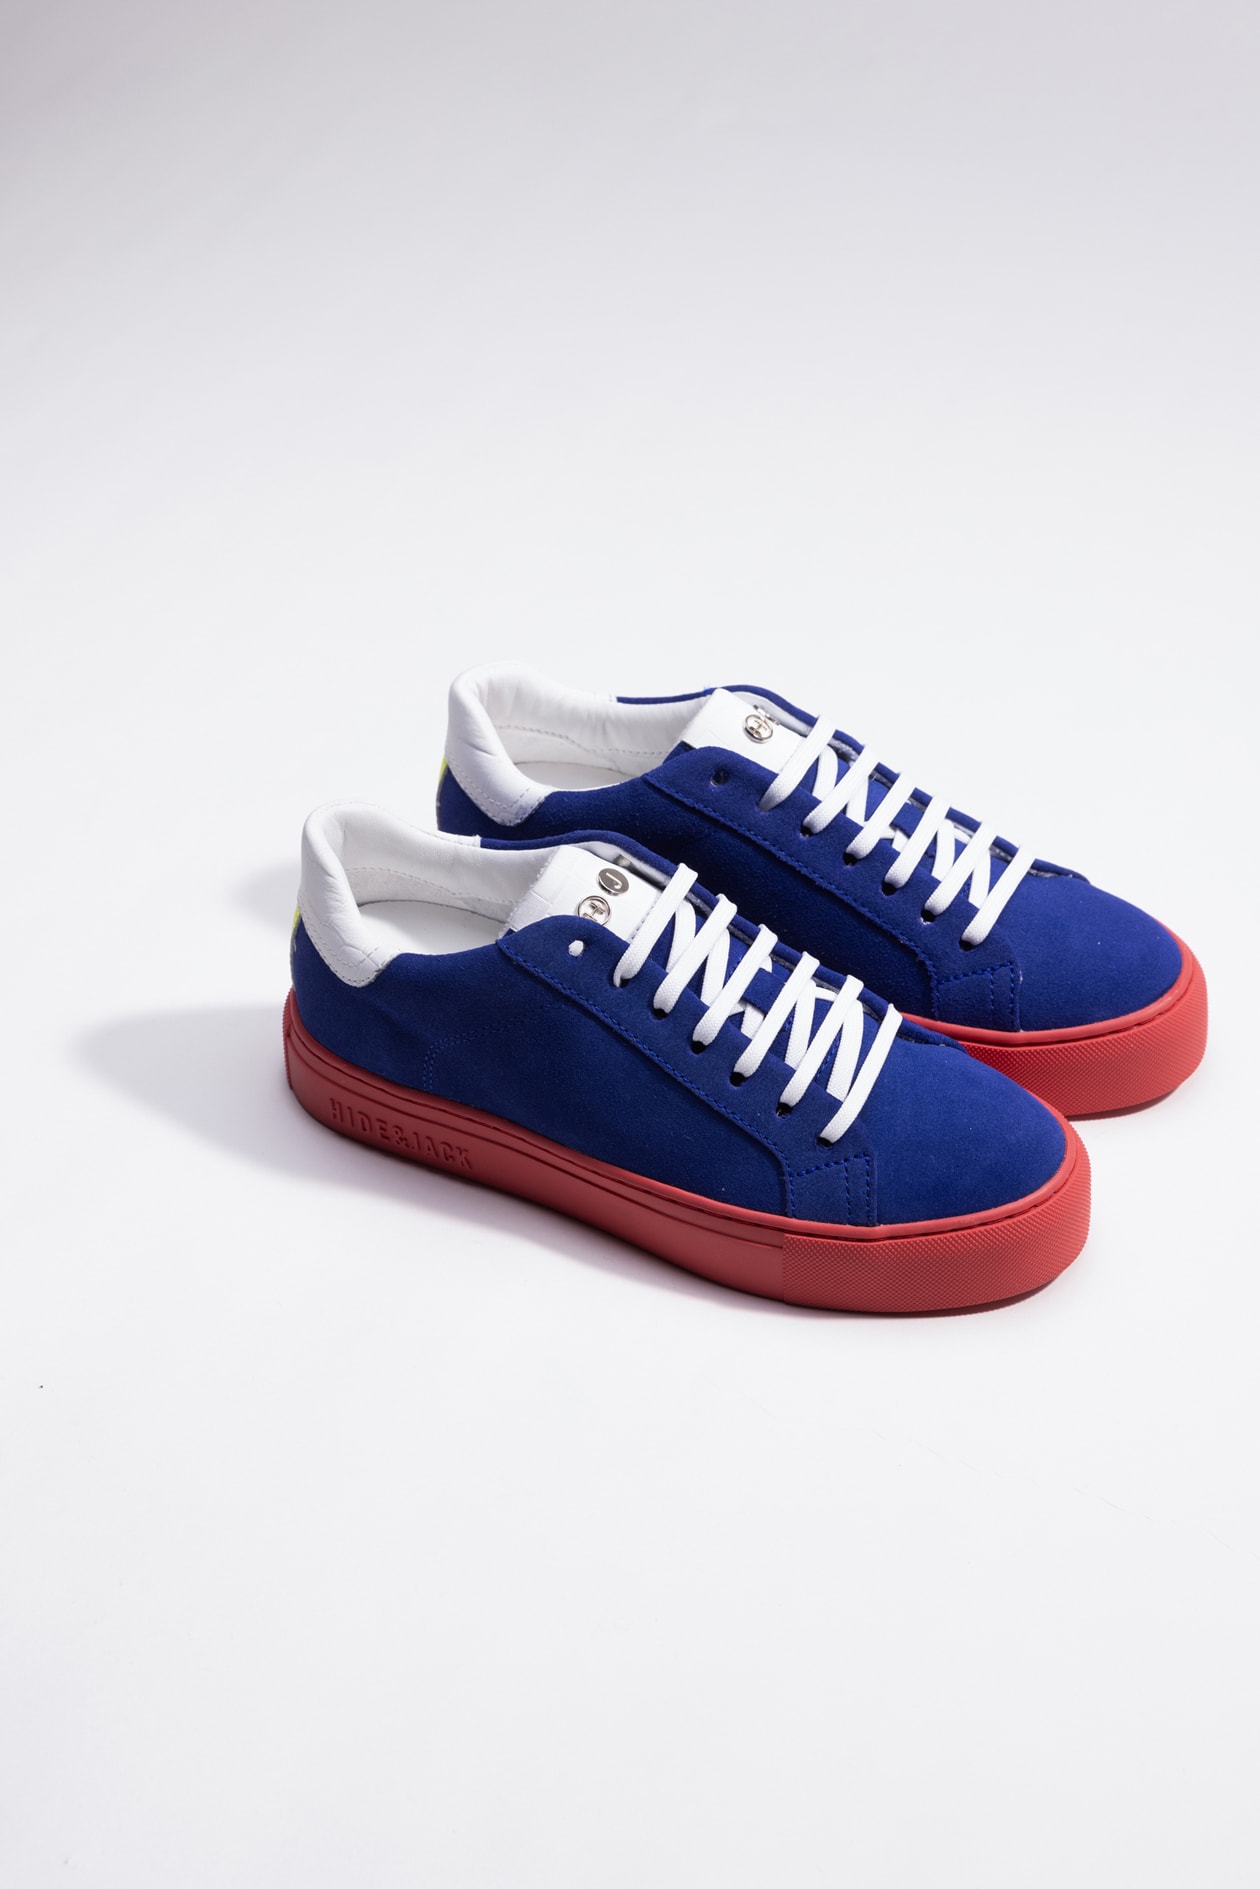 Hide&amp;jack Low Top Sneaker - Essence Oil Azure Red In White